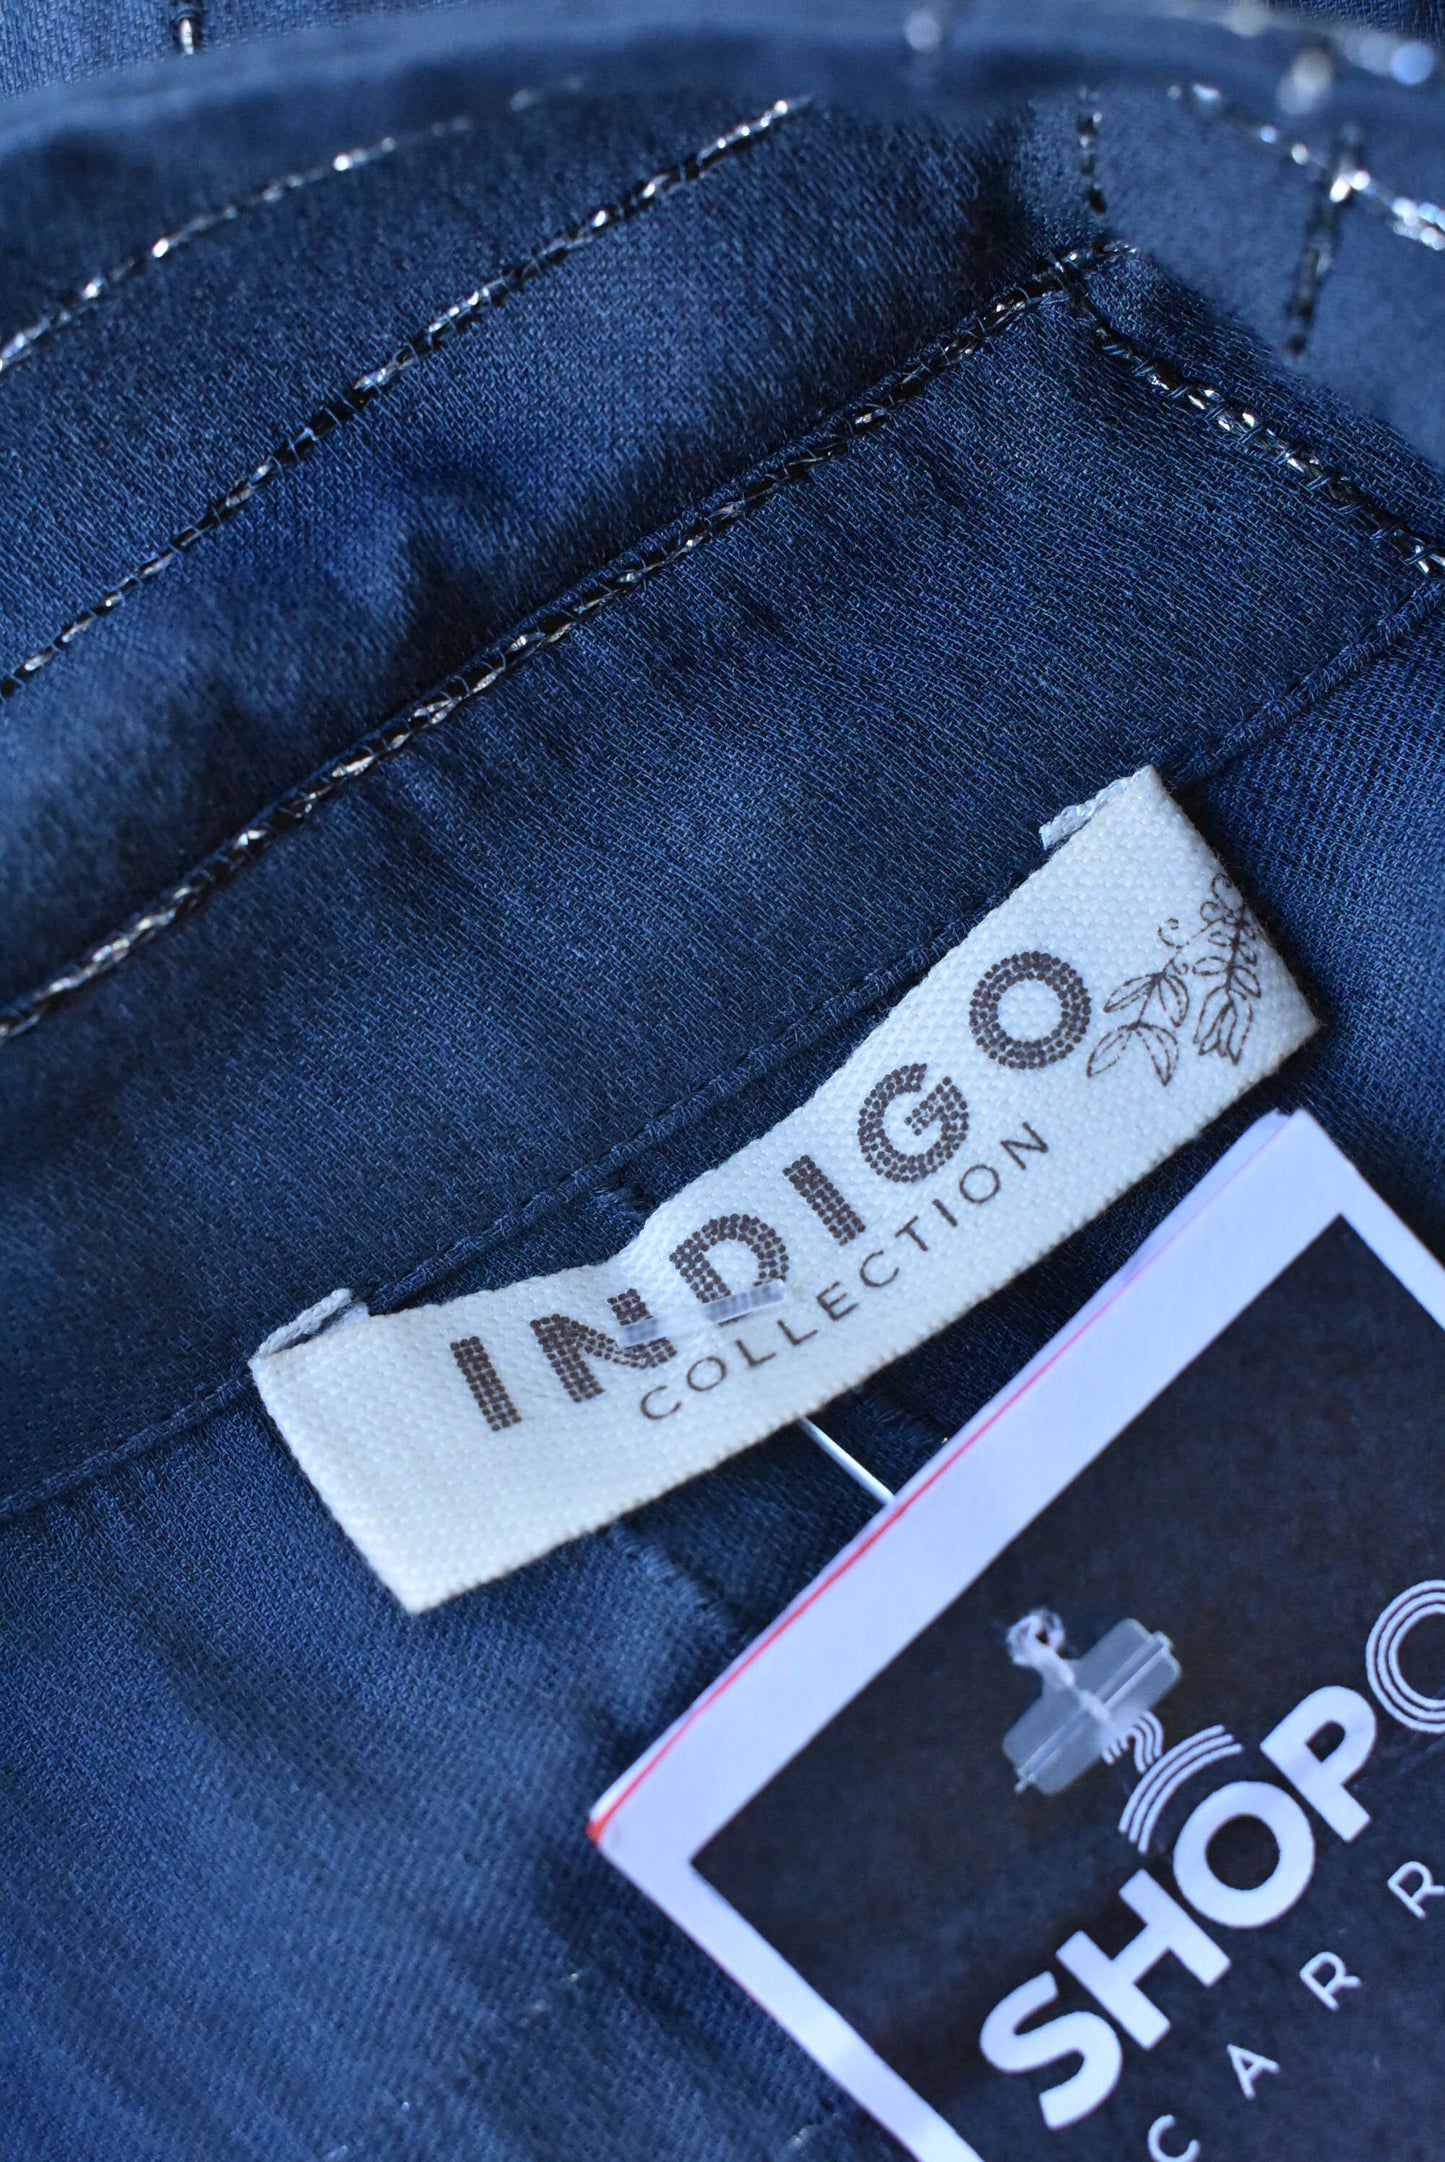 Indigo Collection blue metallic plaid shirt, size 14